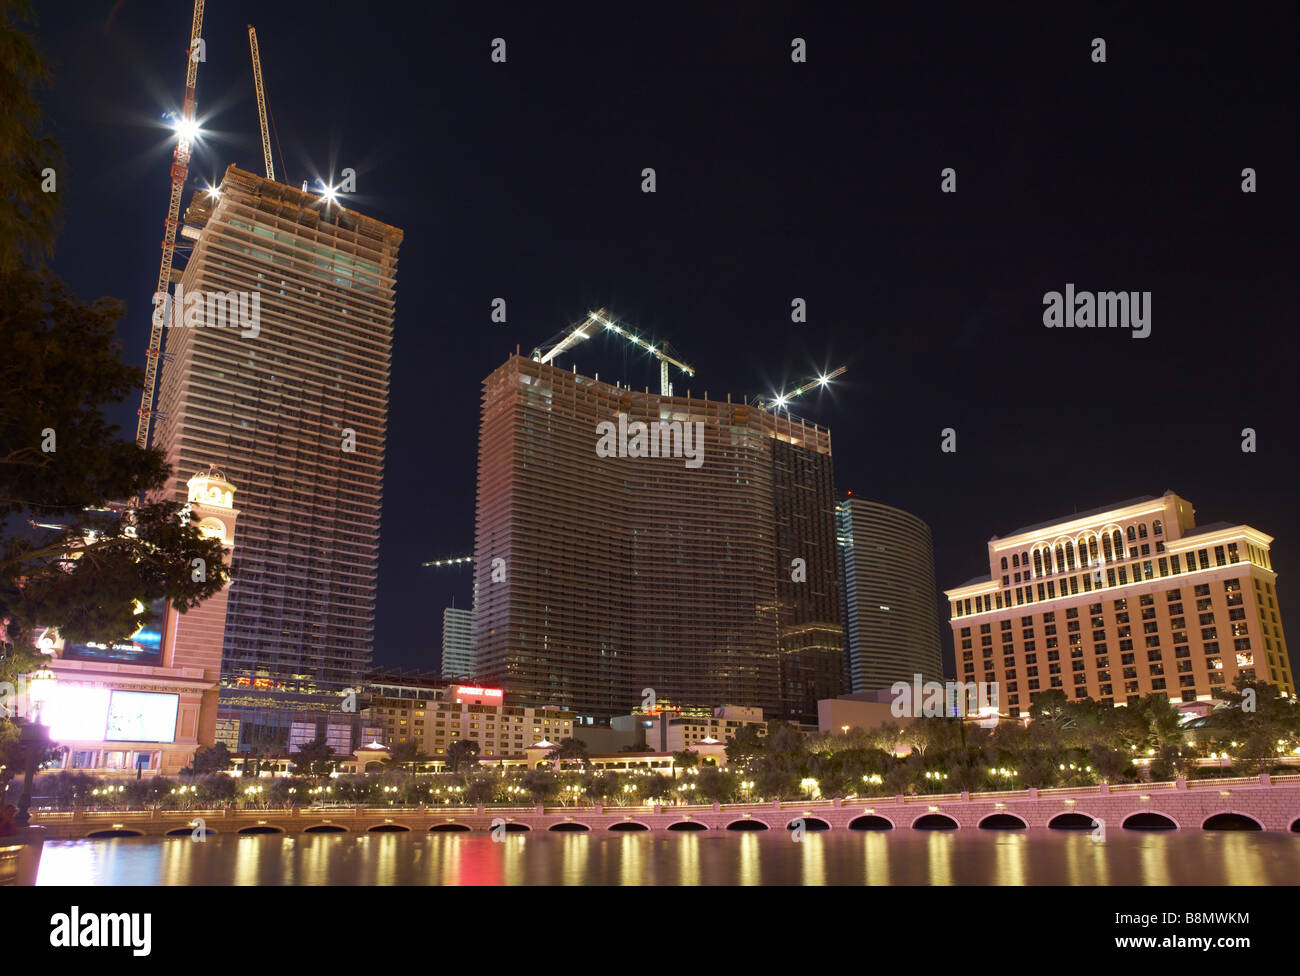 Las Vegas - New Hotel Casino Building - The Strip Stock Photo